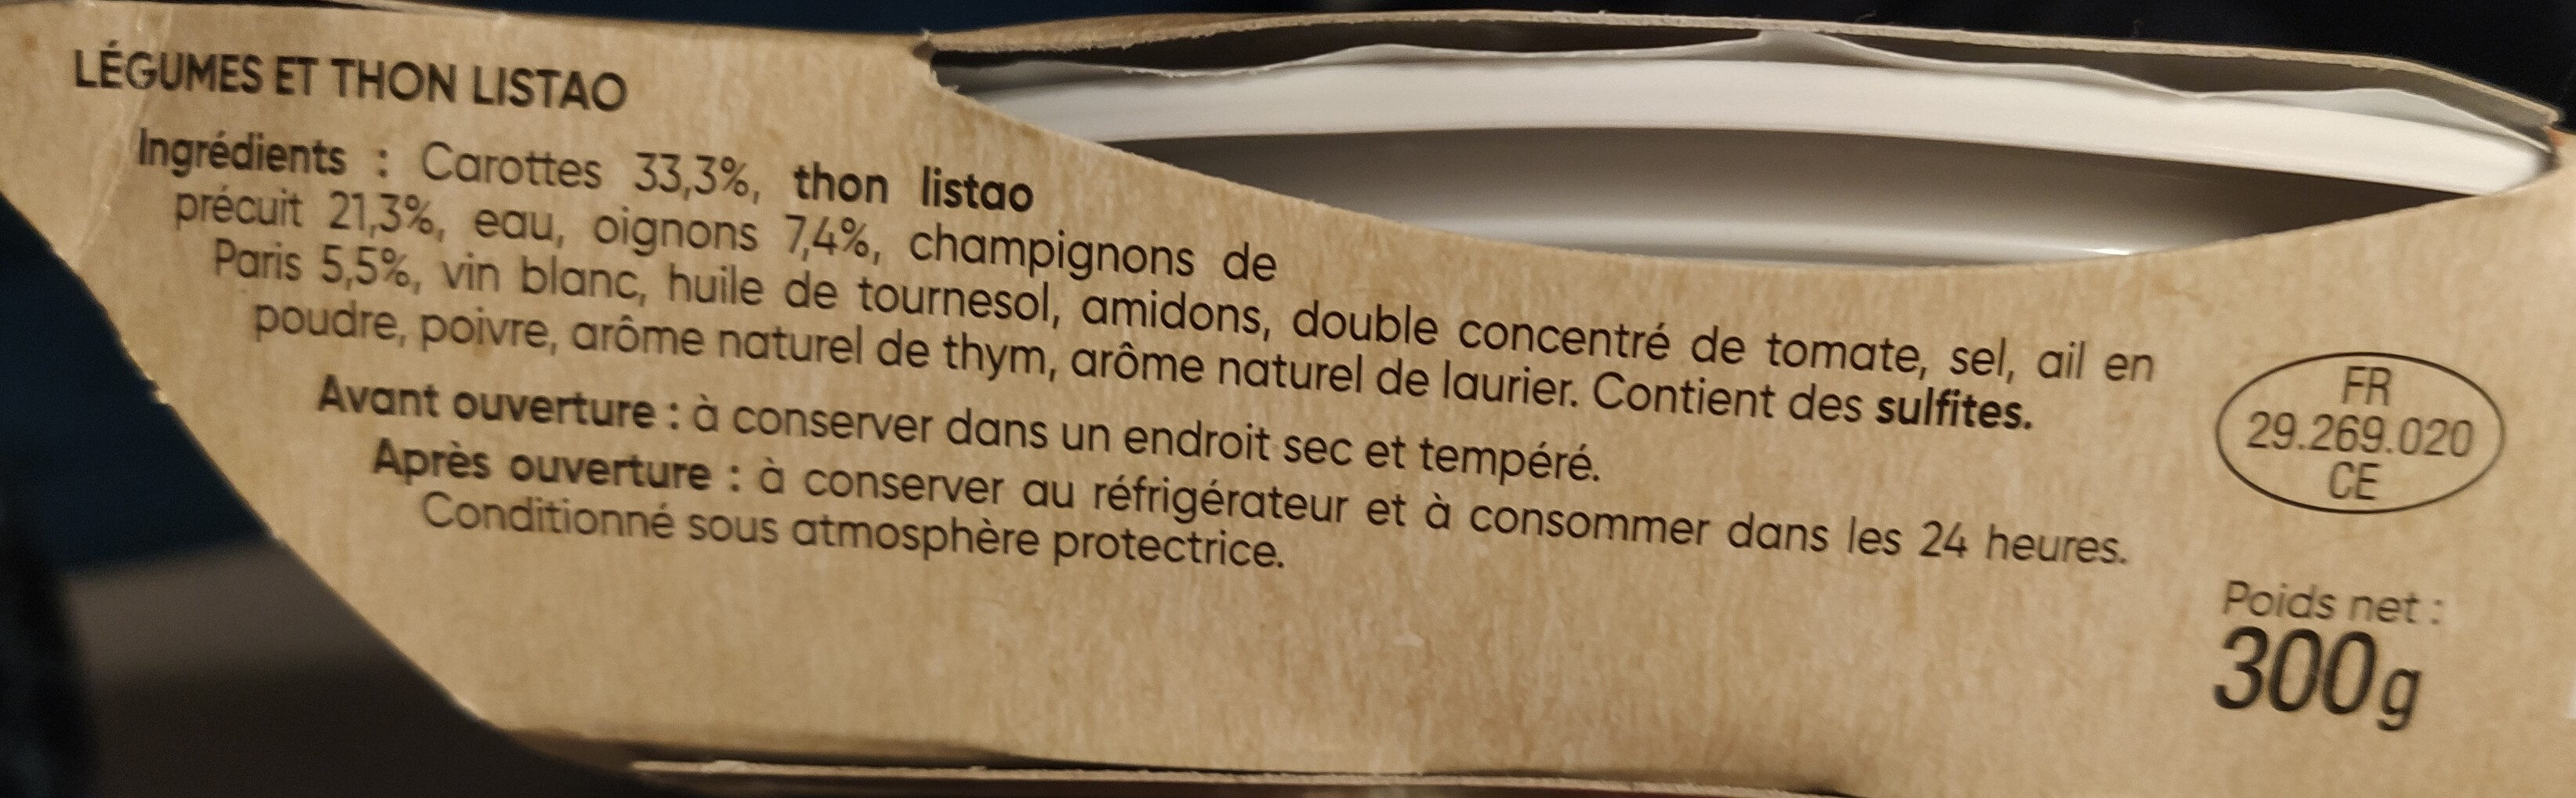 Barquette 300g micro-ondable matelote thon aux petits legumes daucy - Ingredienser - fr